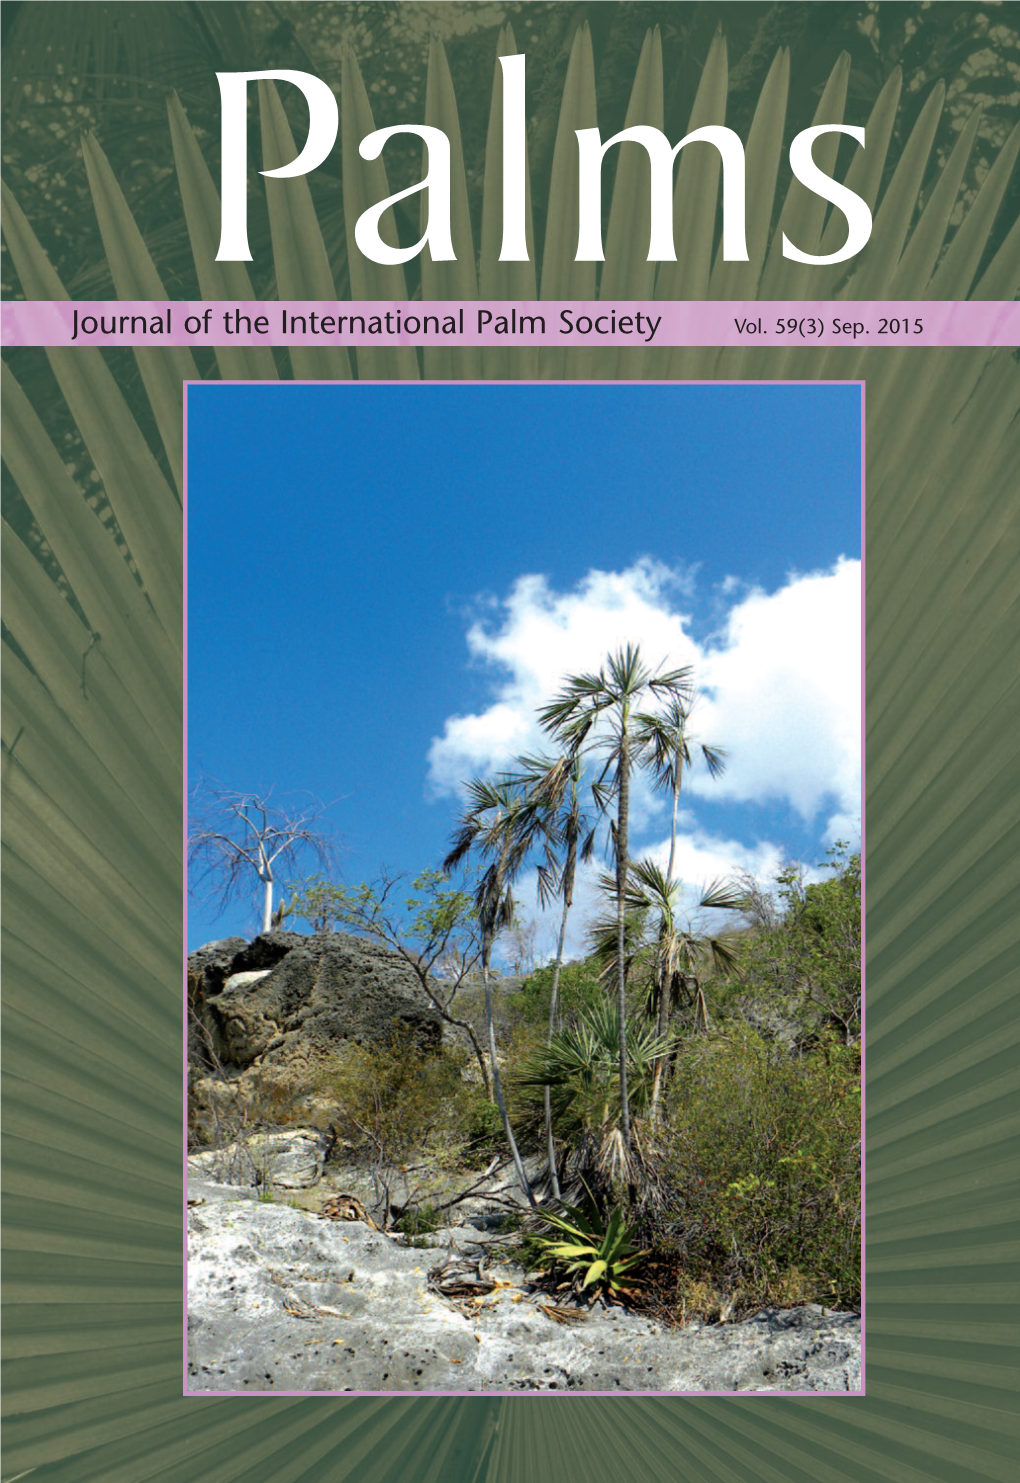 Journal of the International Palm Society Vol. 59(3) Sep. 2015 the INTERNATIONAL PALM SOCIETY, INC